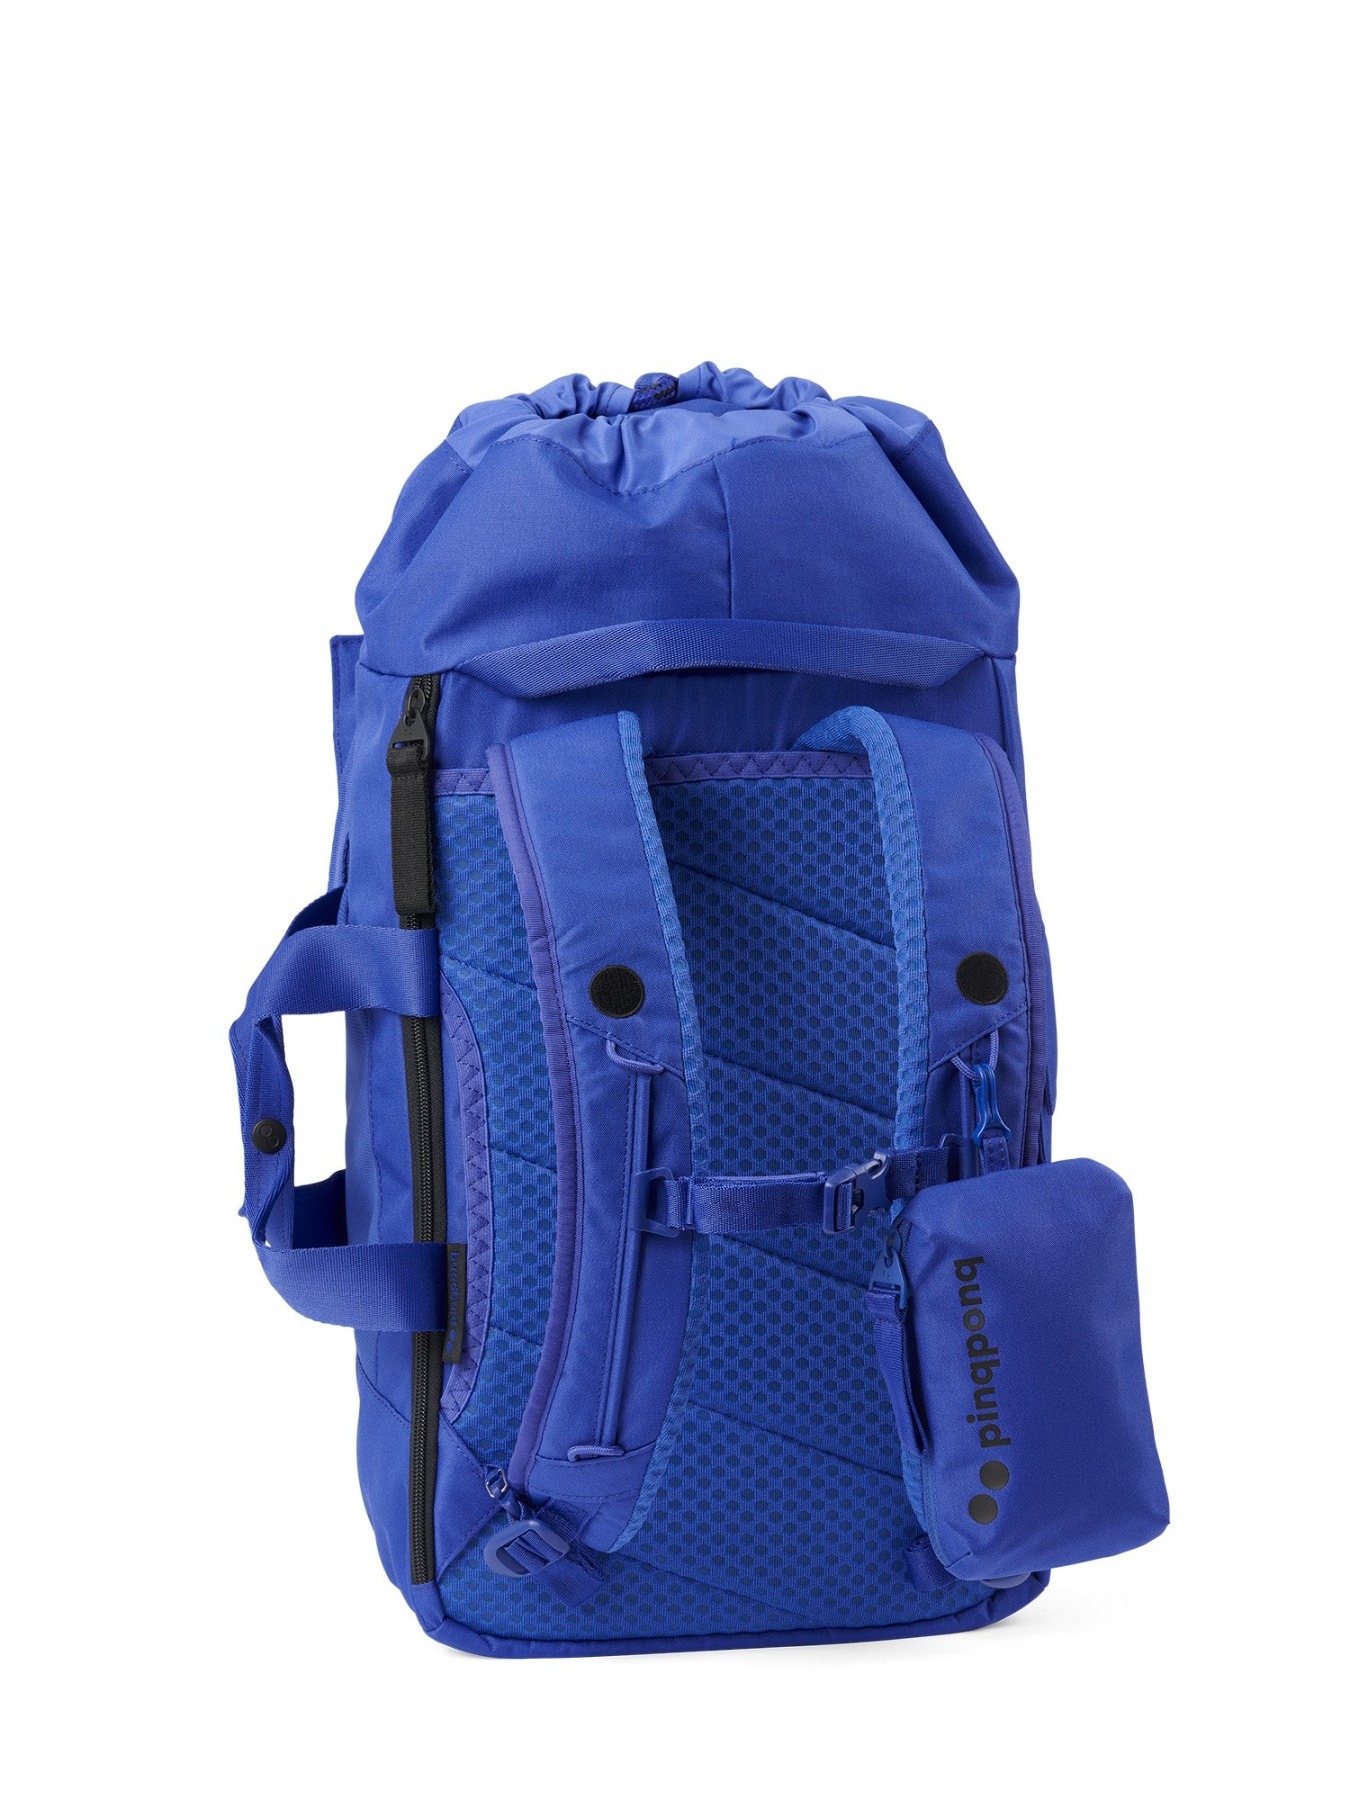 pinqponq Backpack BLOK medium Construct - Poppy Blue 5